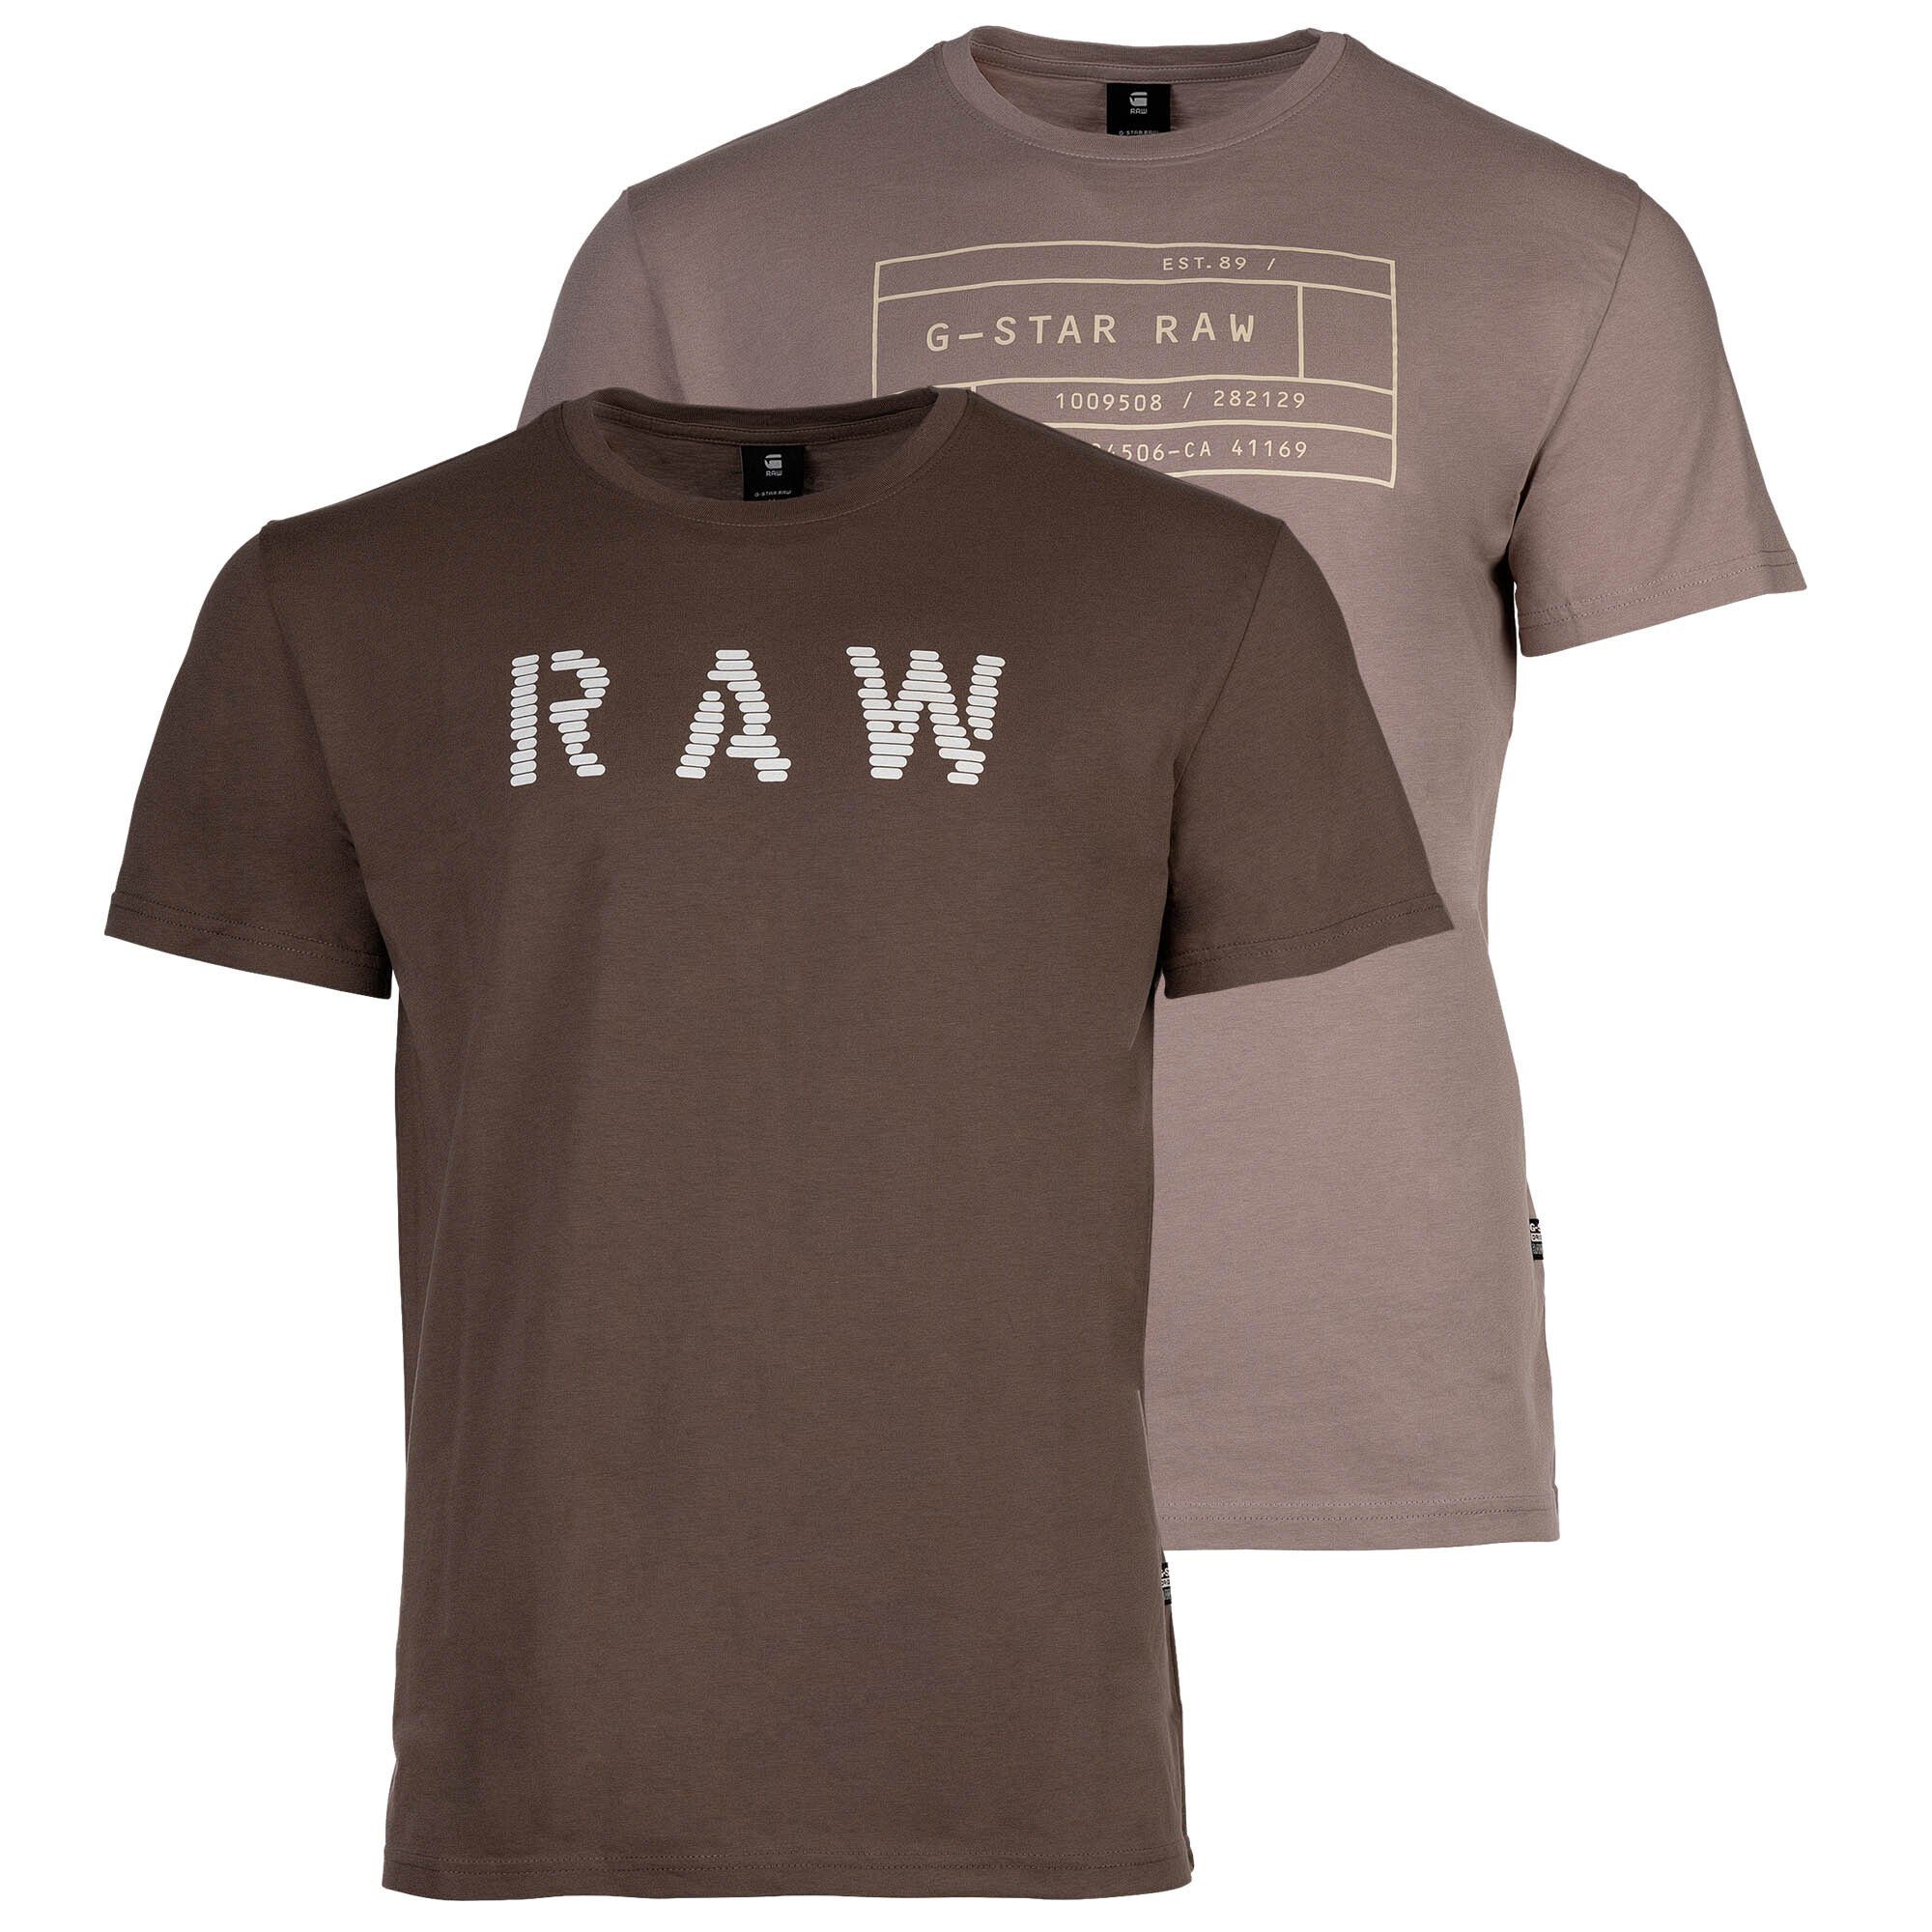 G-Star RAW T-Shirt Herren T-Shirt, 2er Pack - Graphic, Rundhals Grau/Braun